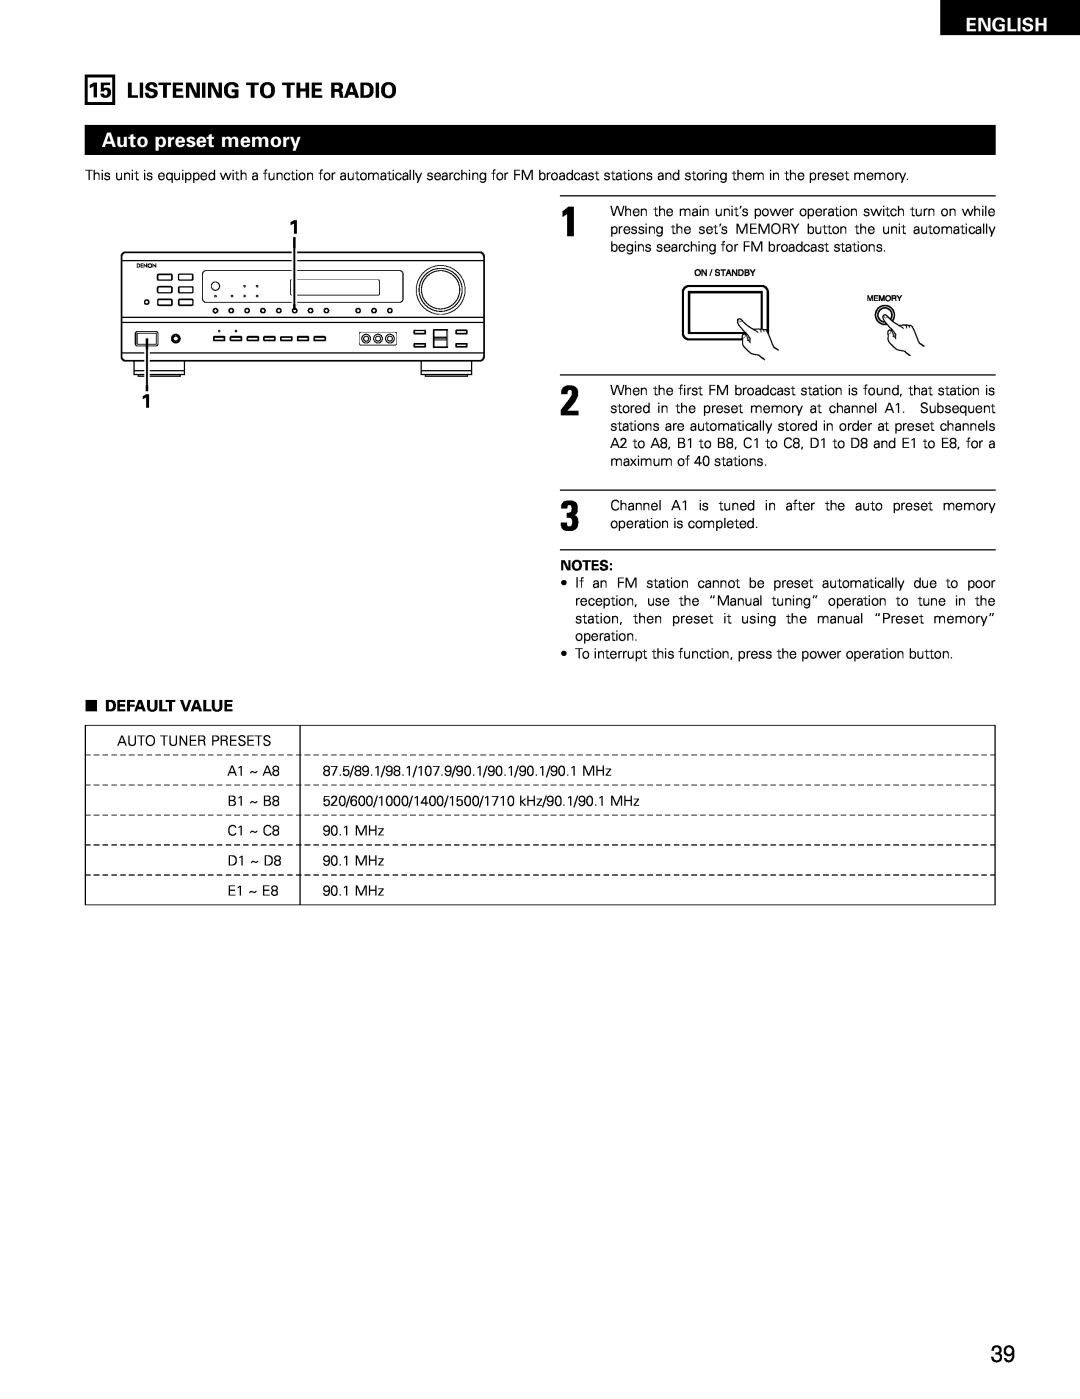 Denon AVR-682, AVR-1602 manual Listening To The Radio, Auto preset memory, English, 2DEFAULT VALUE 